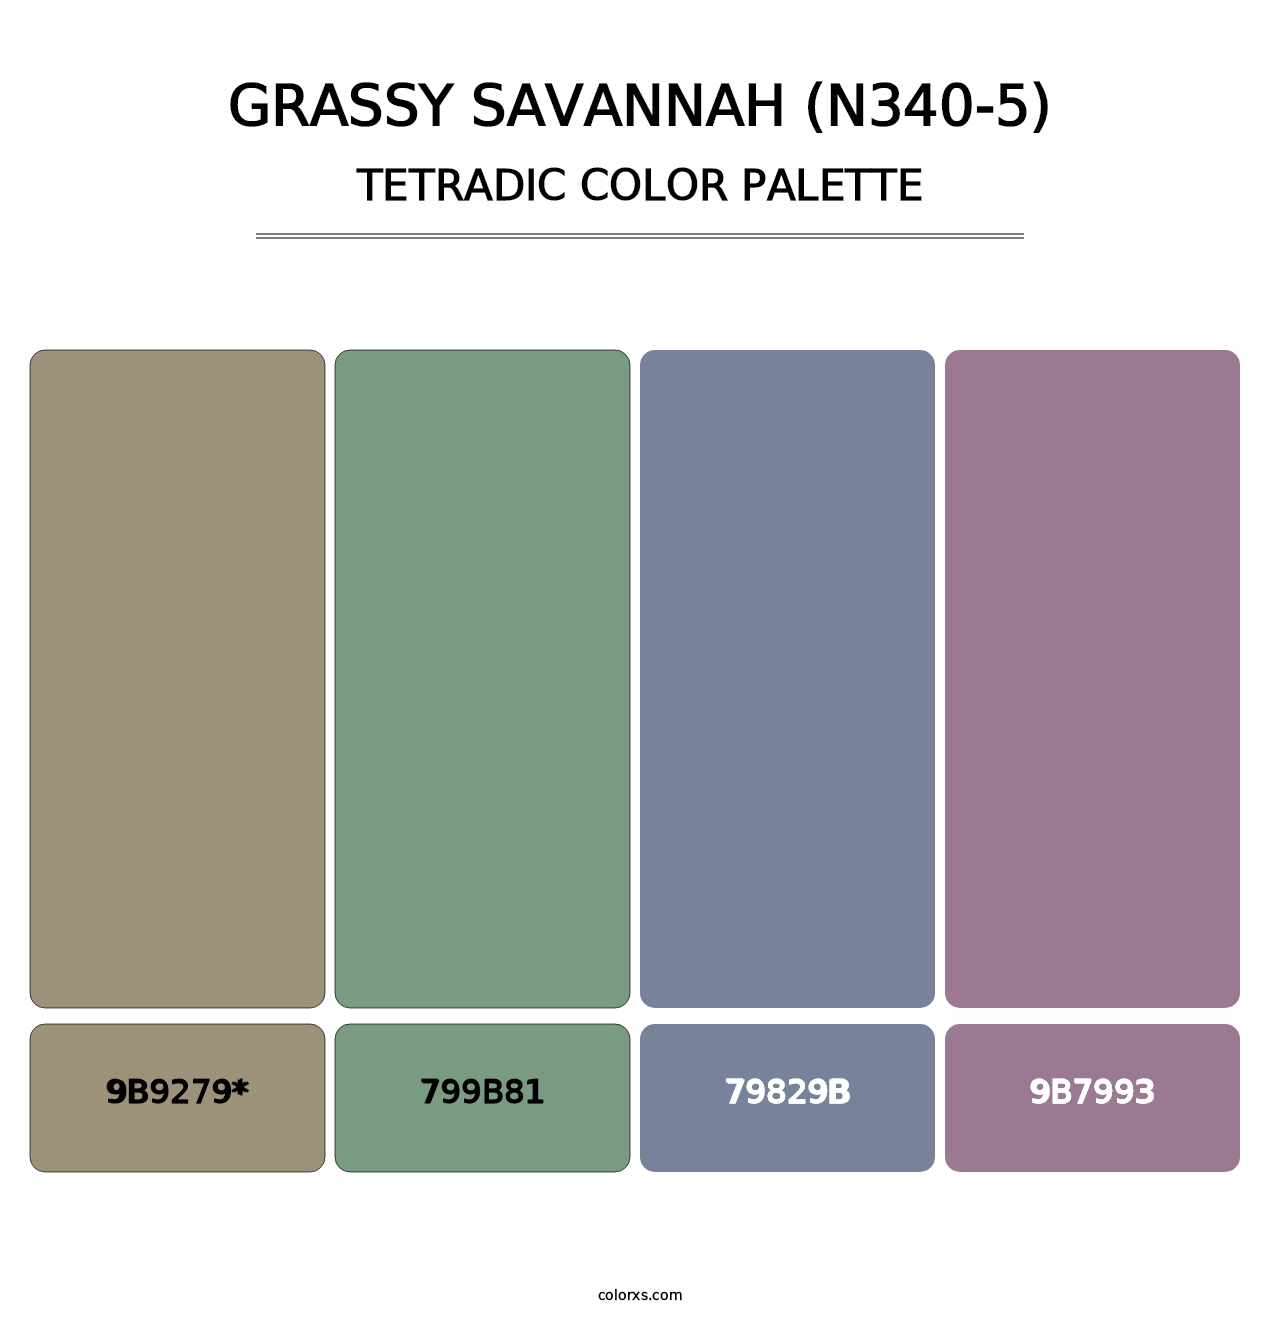 Grassy Savannah (N340-5) - Tetradic Color Palette